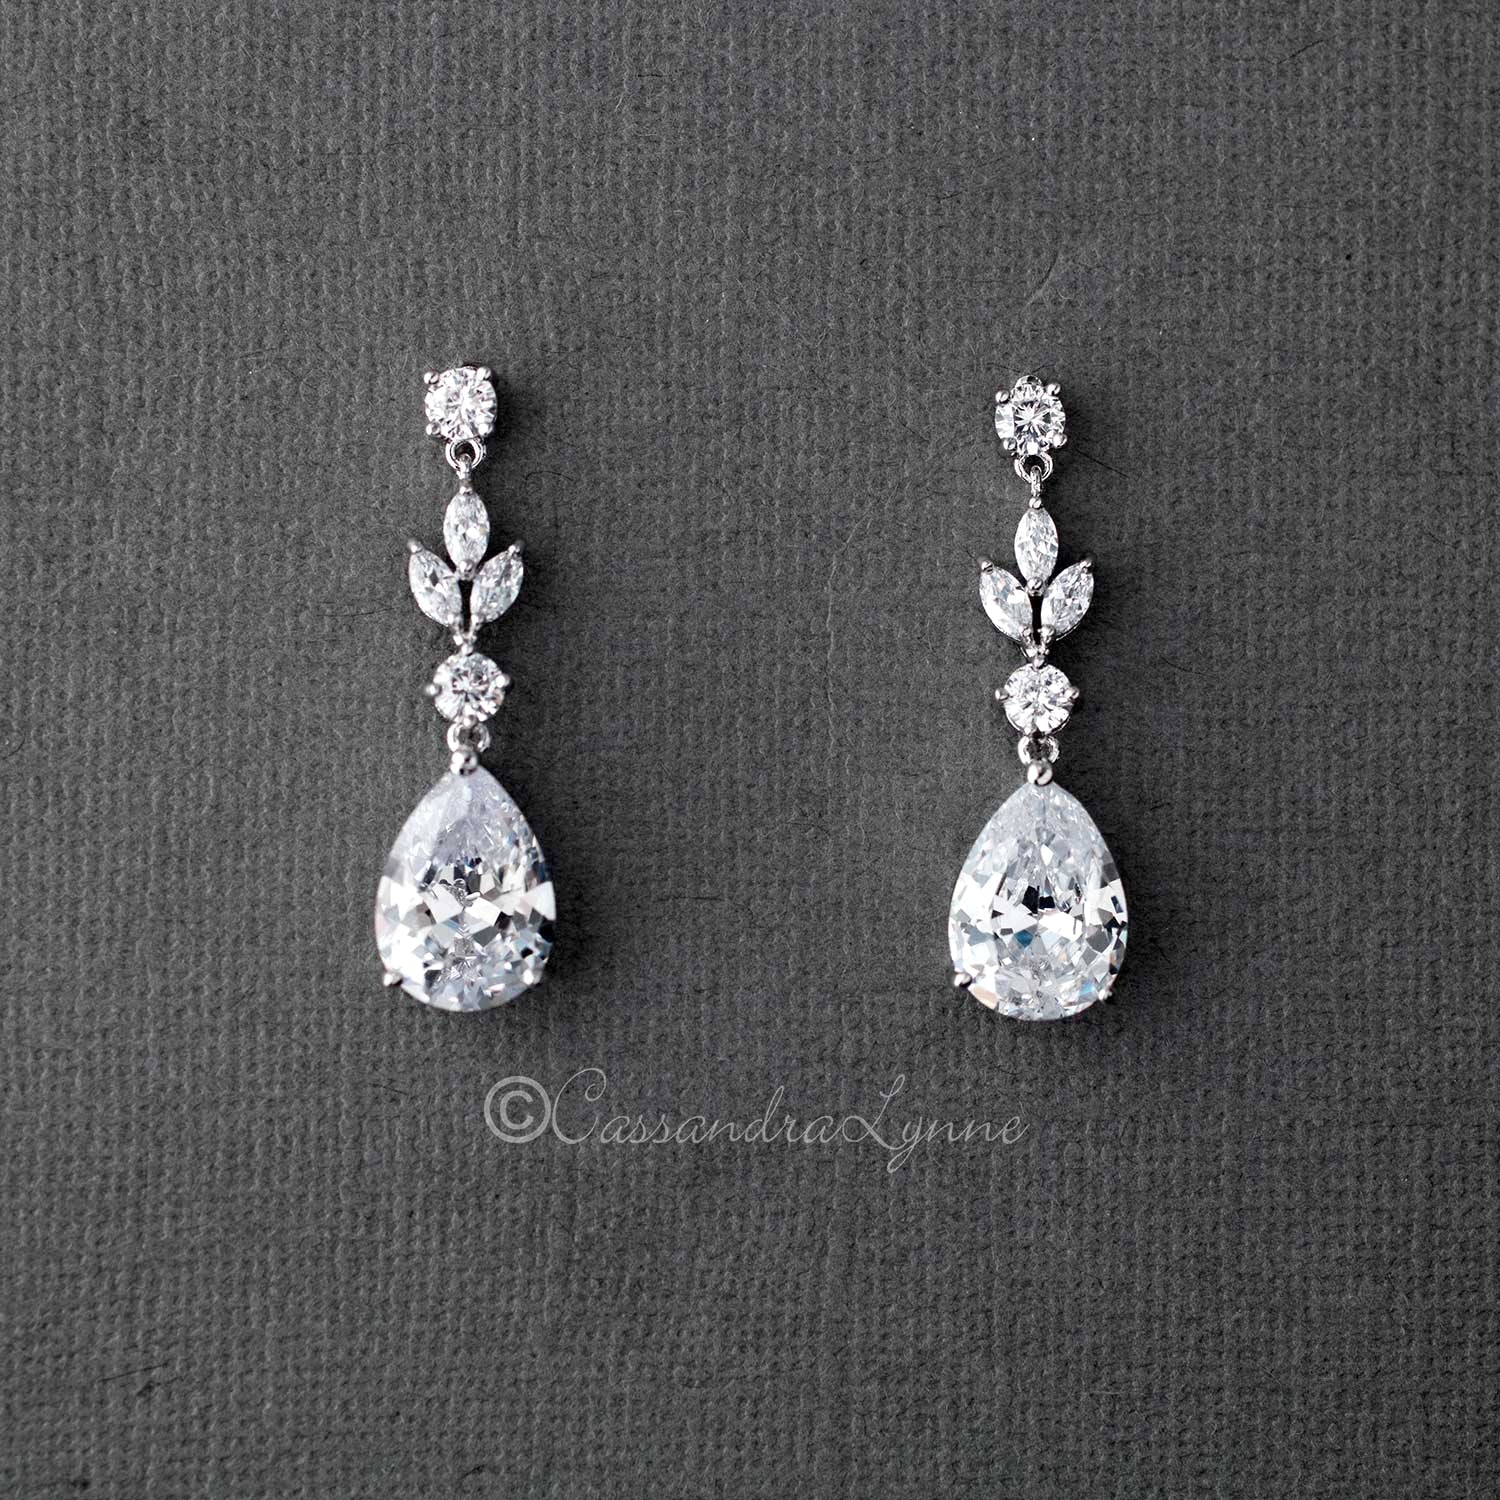 CZ Pear Drop Bridal Earrings